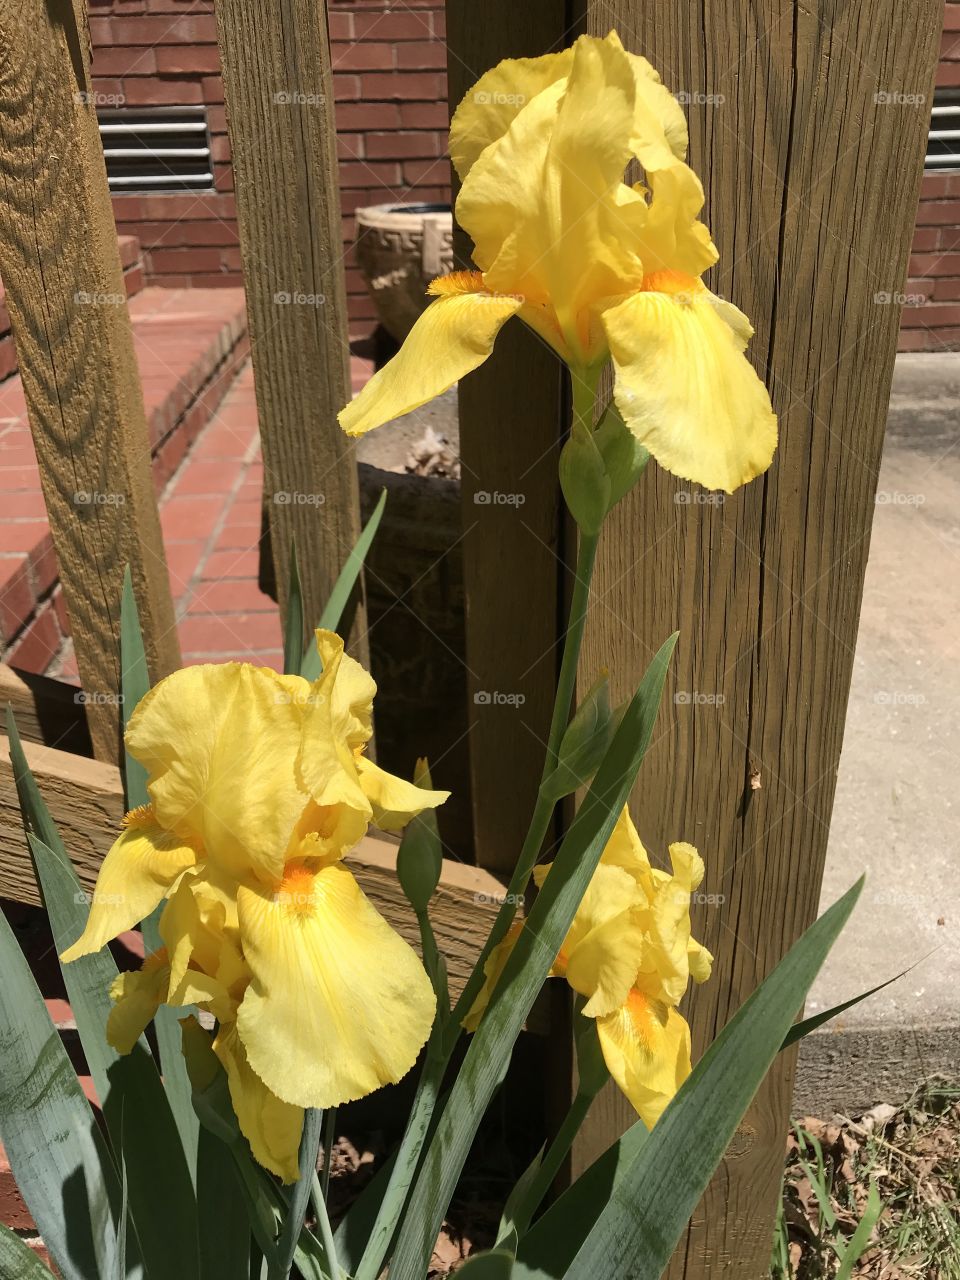 Beautiful yellow iris blooms brighten up a yard.